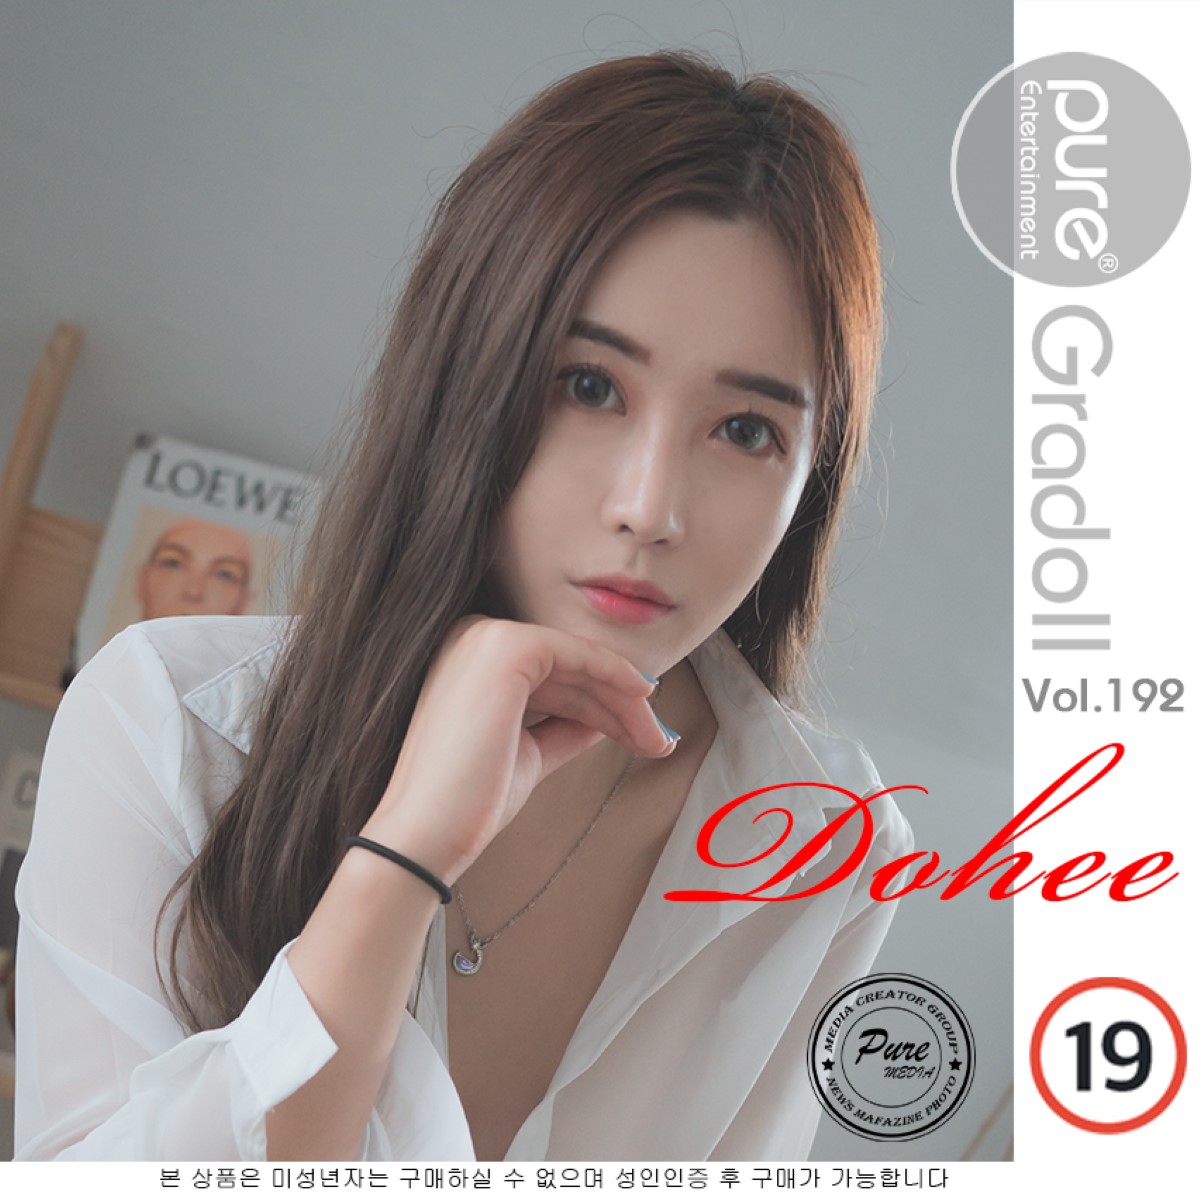 PureMedia-Vol-192-Dohee-도희-0058-1935265359.jpg